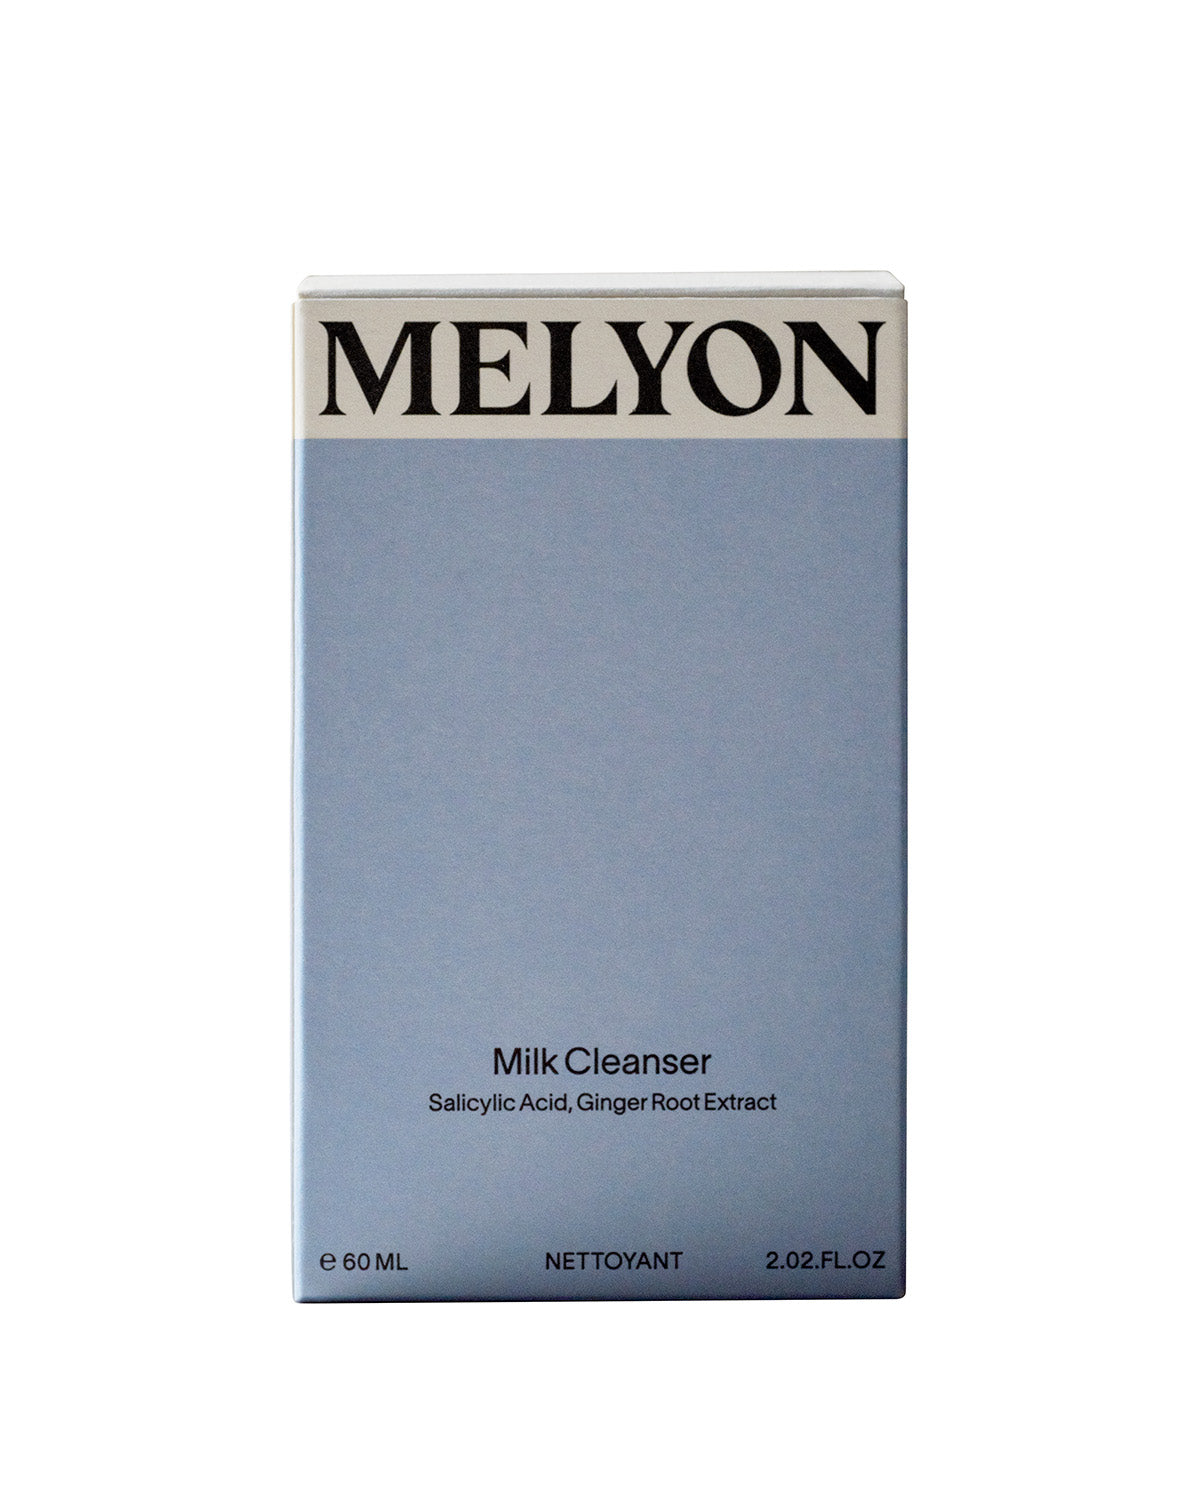 MELYON - MILK CLEANSER